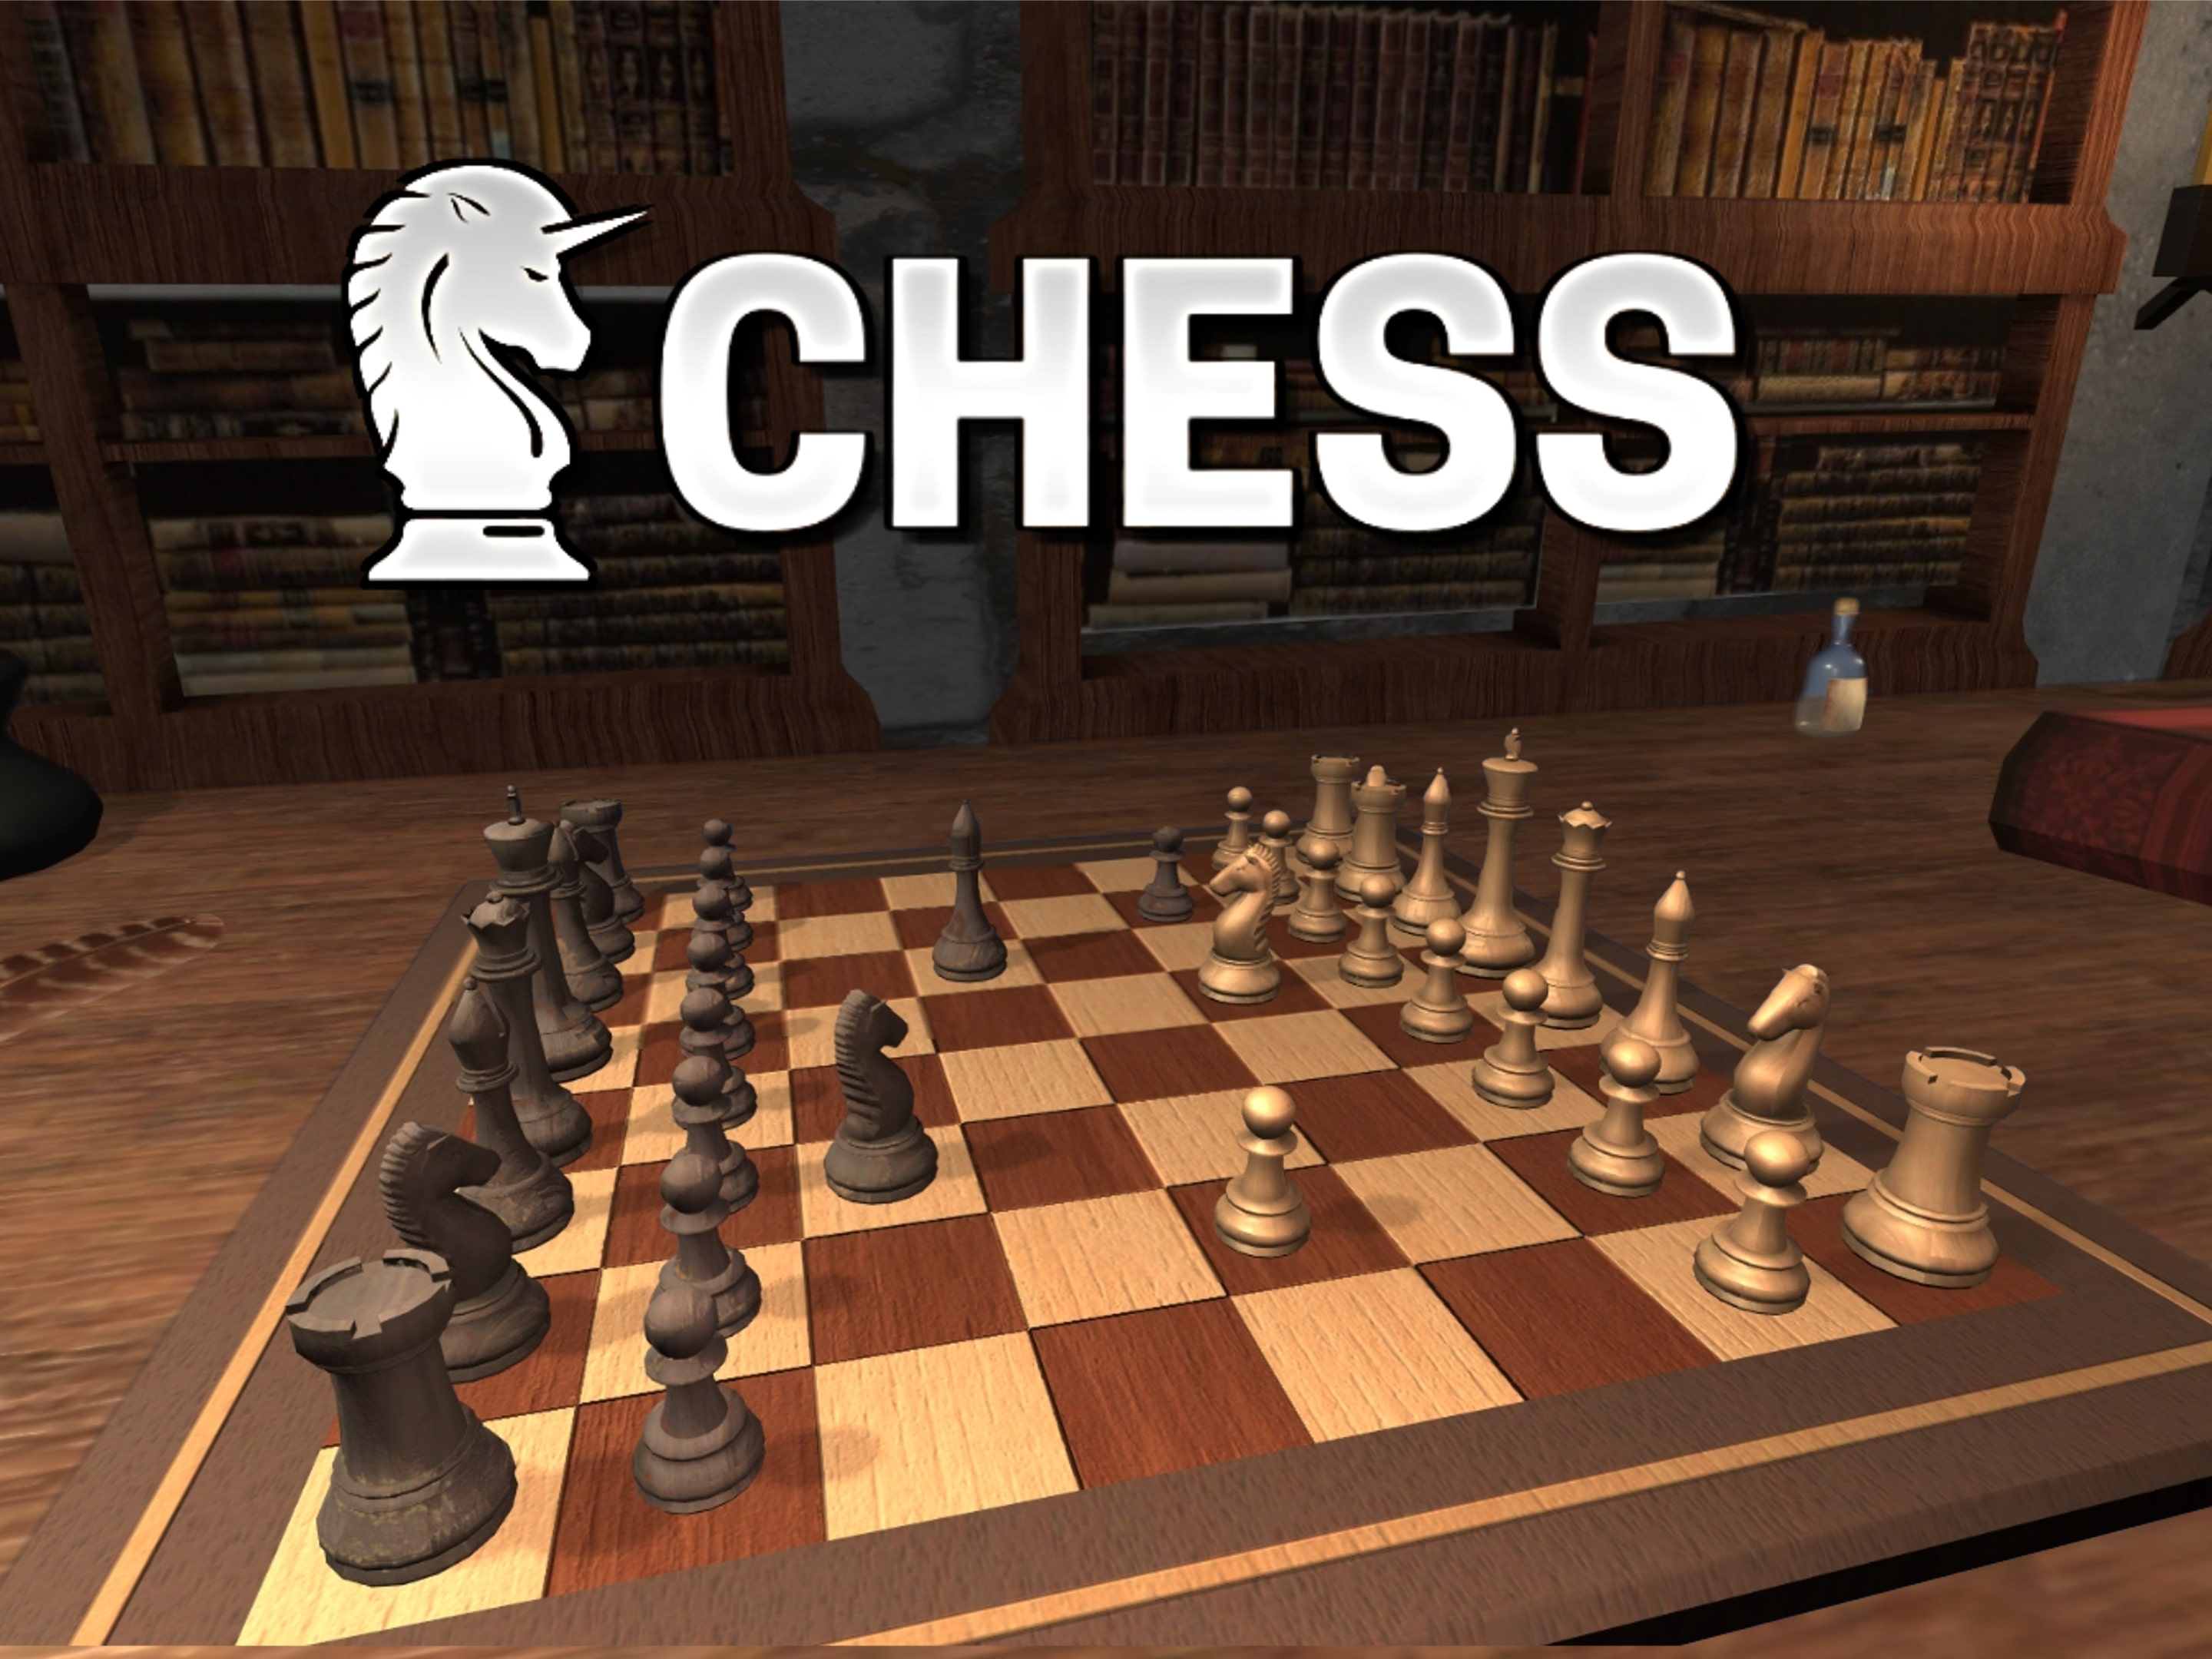 Mais um aplicativo para jogar xadrez 3D: Real Chess 3D! 